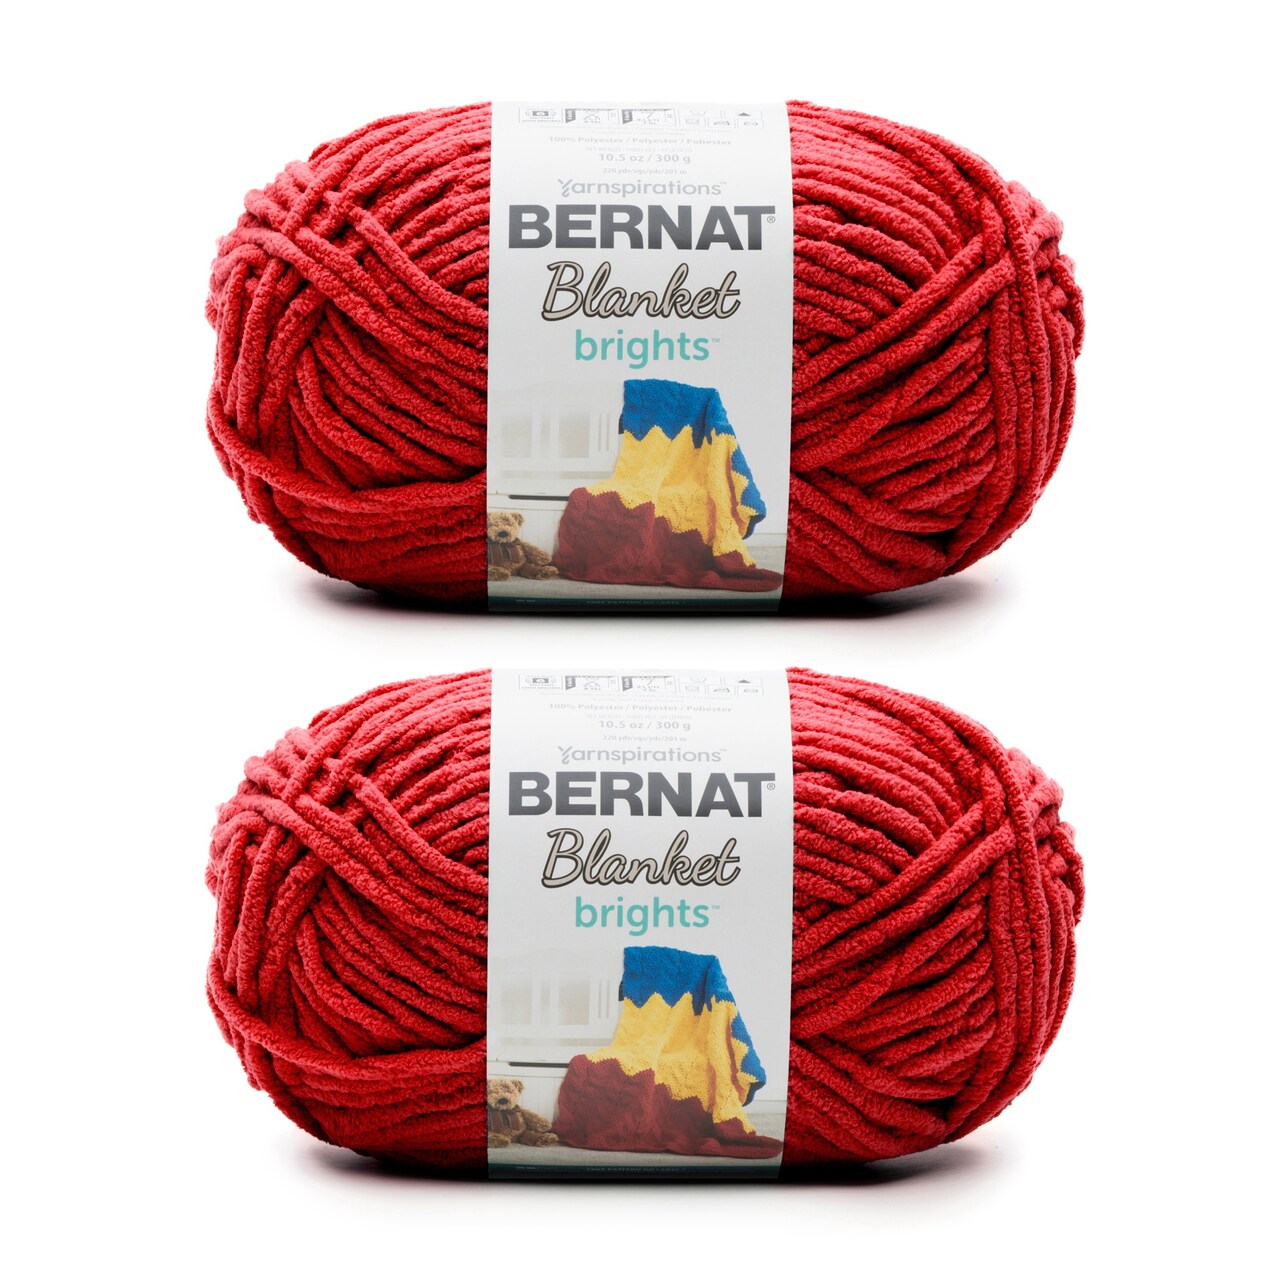 Bernat Blanket Brights Race Car Red Yarn - 2 Pack of 300g/10.5oz -  Polyester - 6 Super Bulky - 220 Yards - Knitting/Crochet